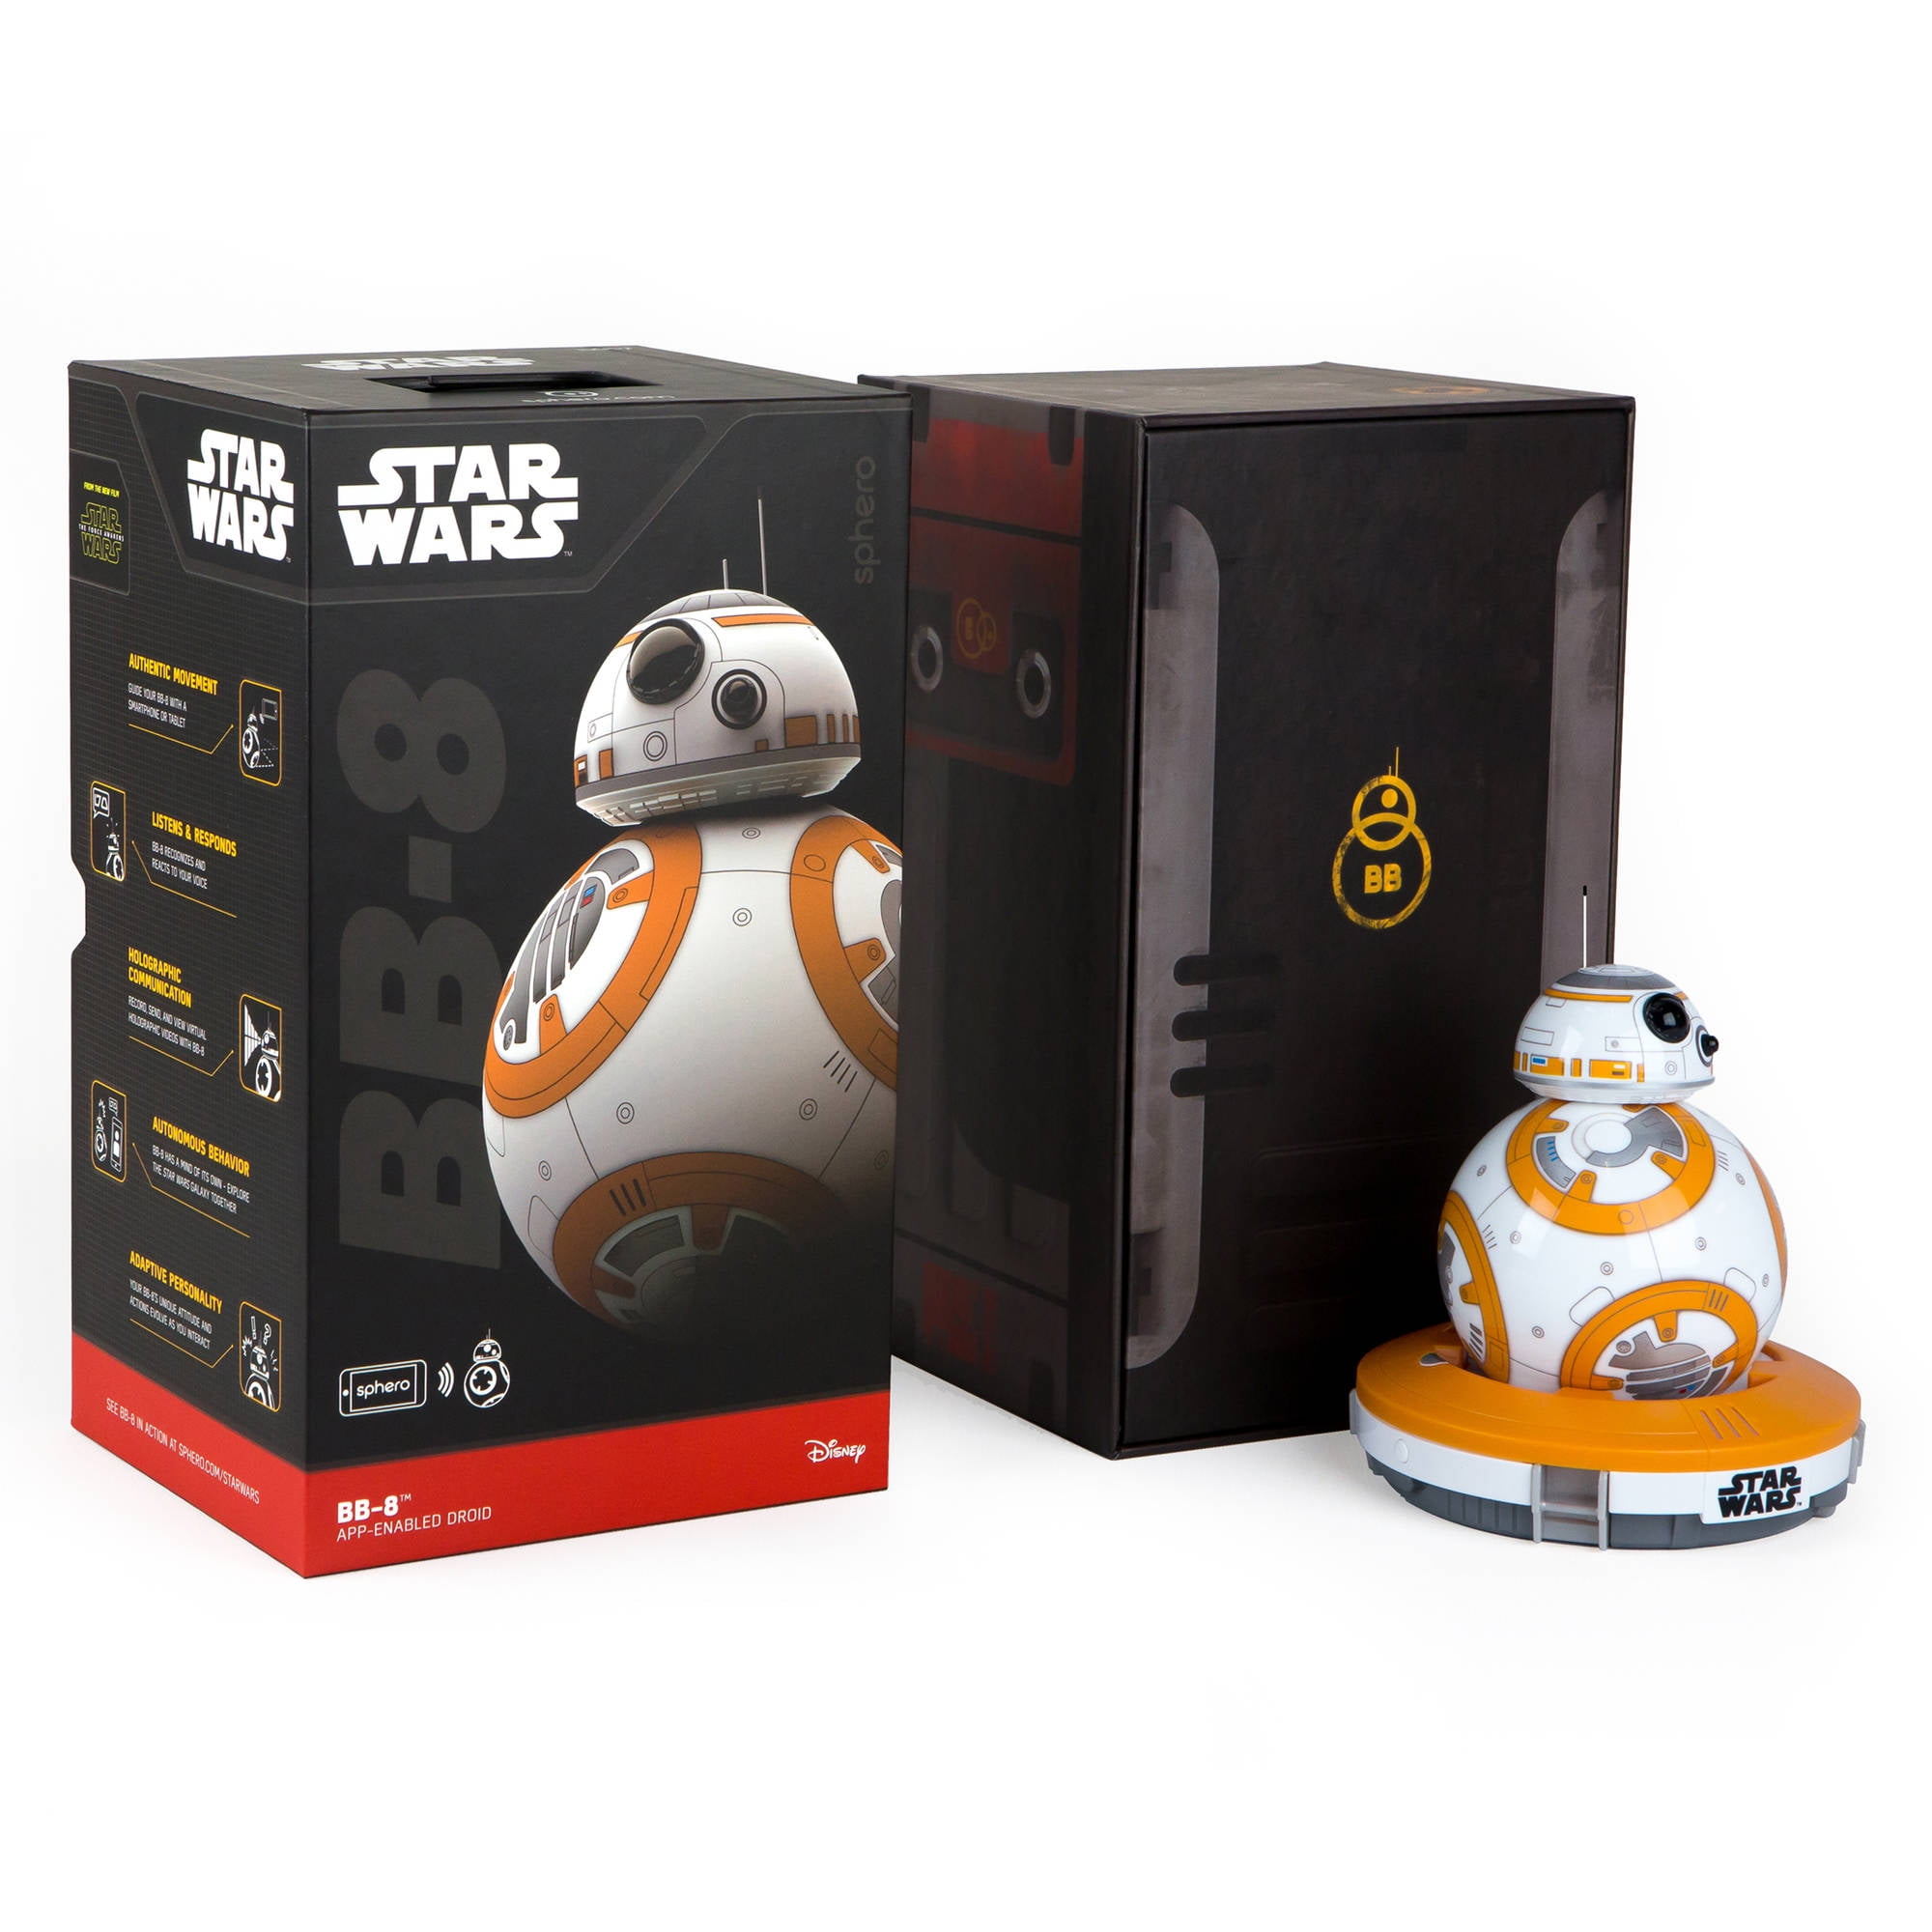 Star Wars BB-8 App Enabled Droid Toy Sphero FAULTY 